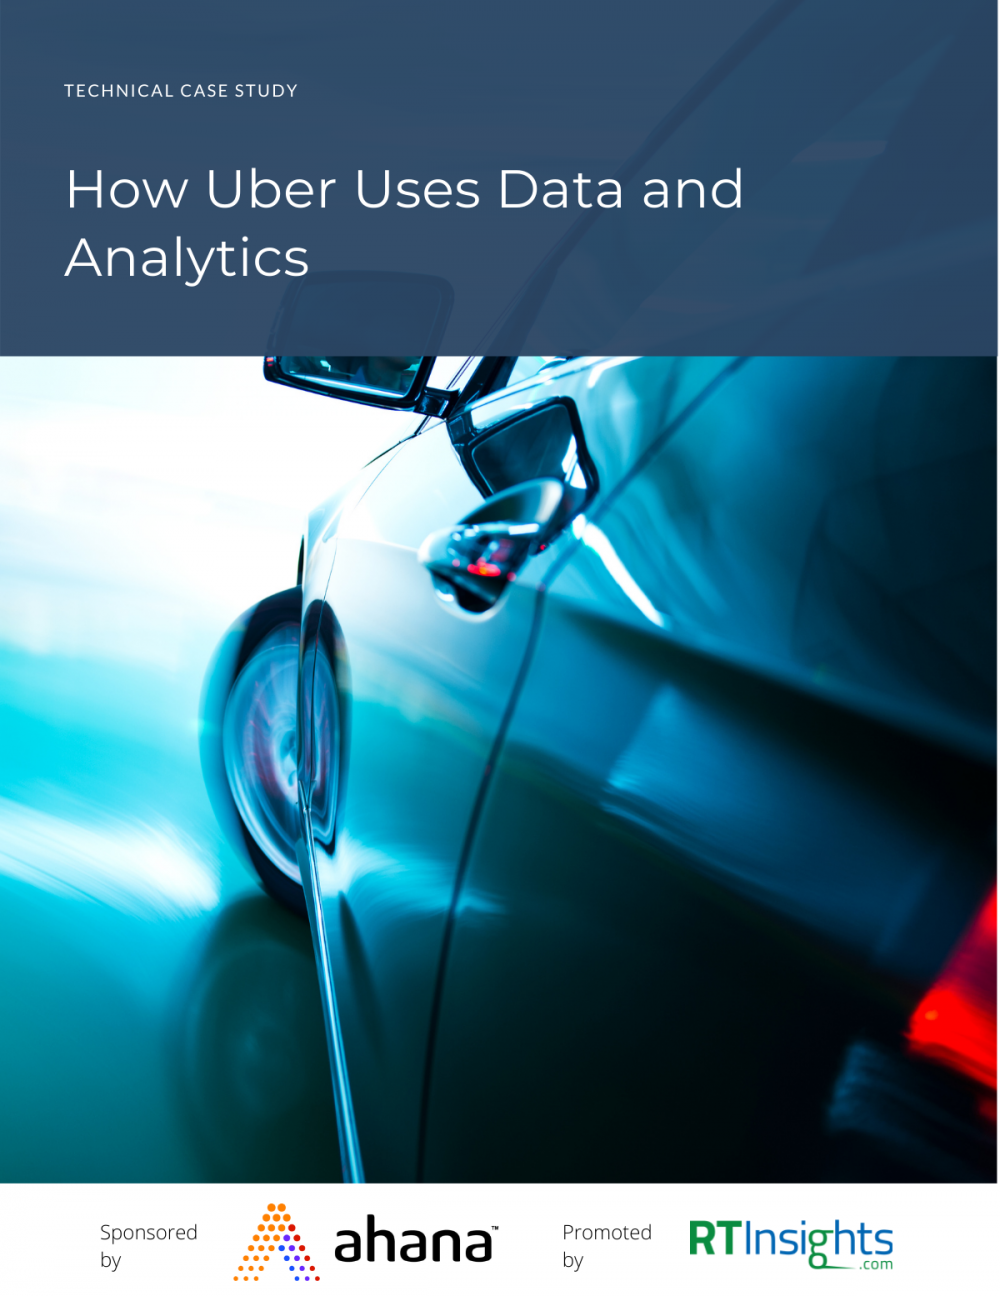 uber data analysis case study